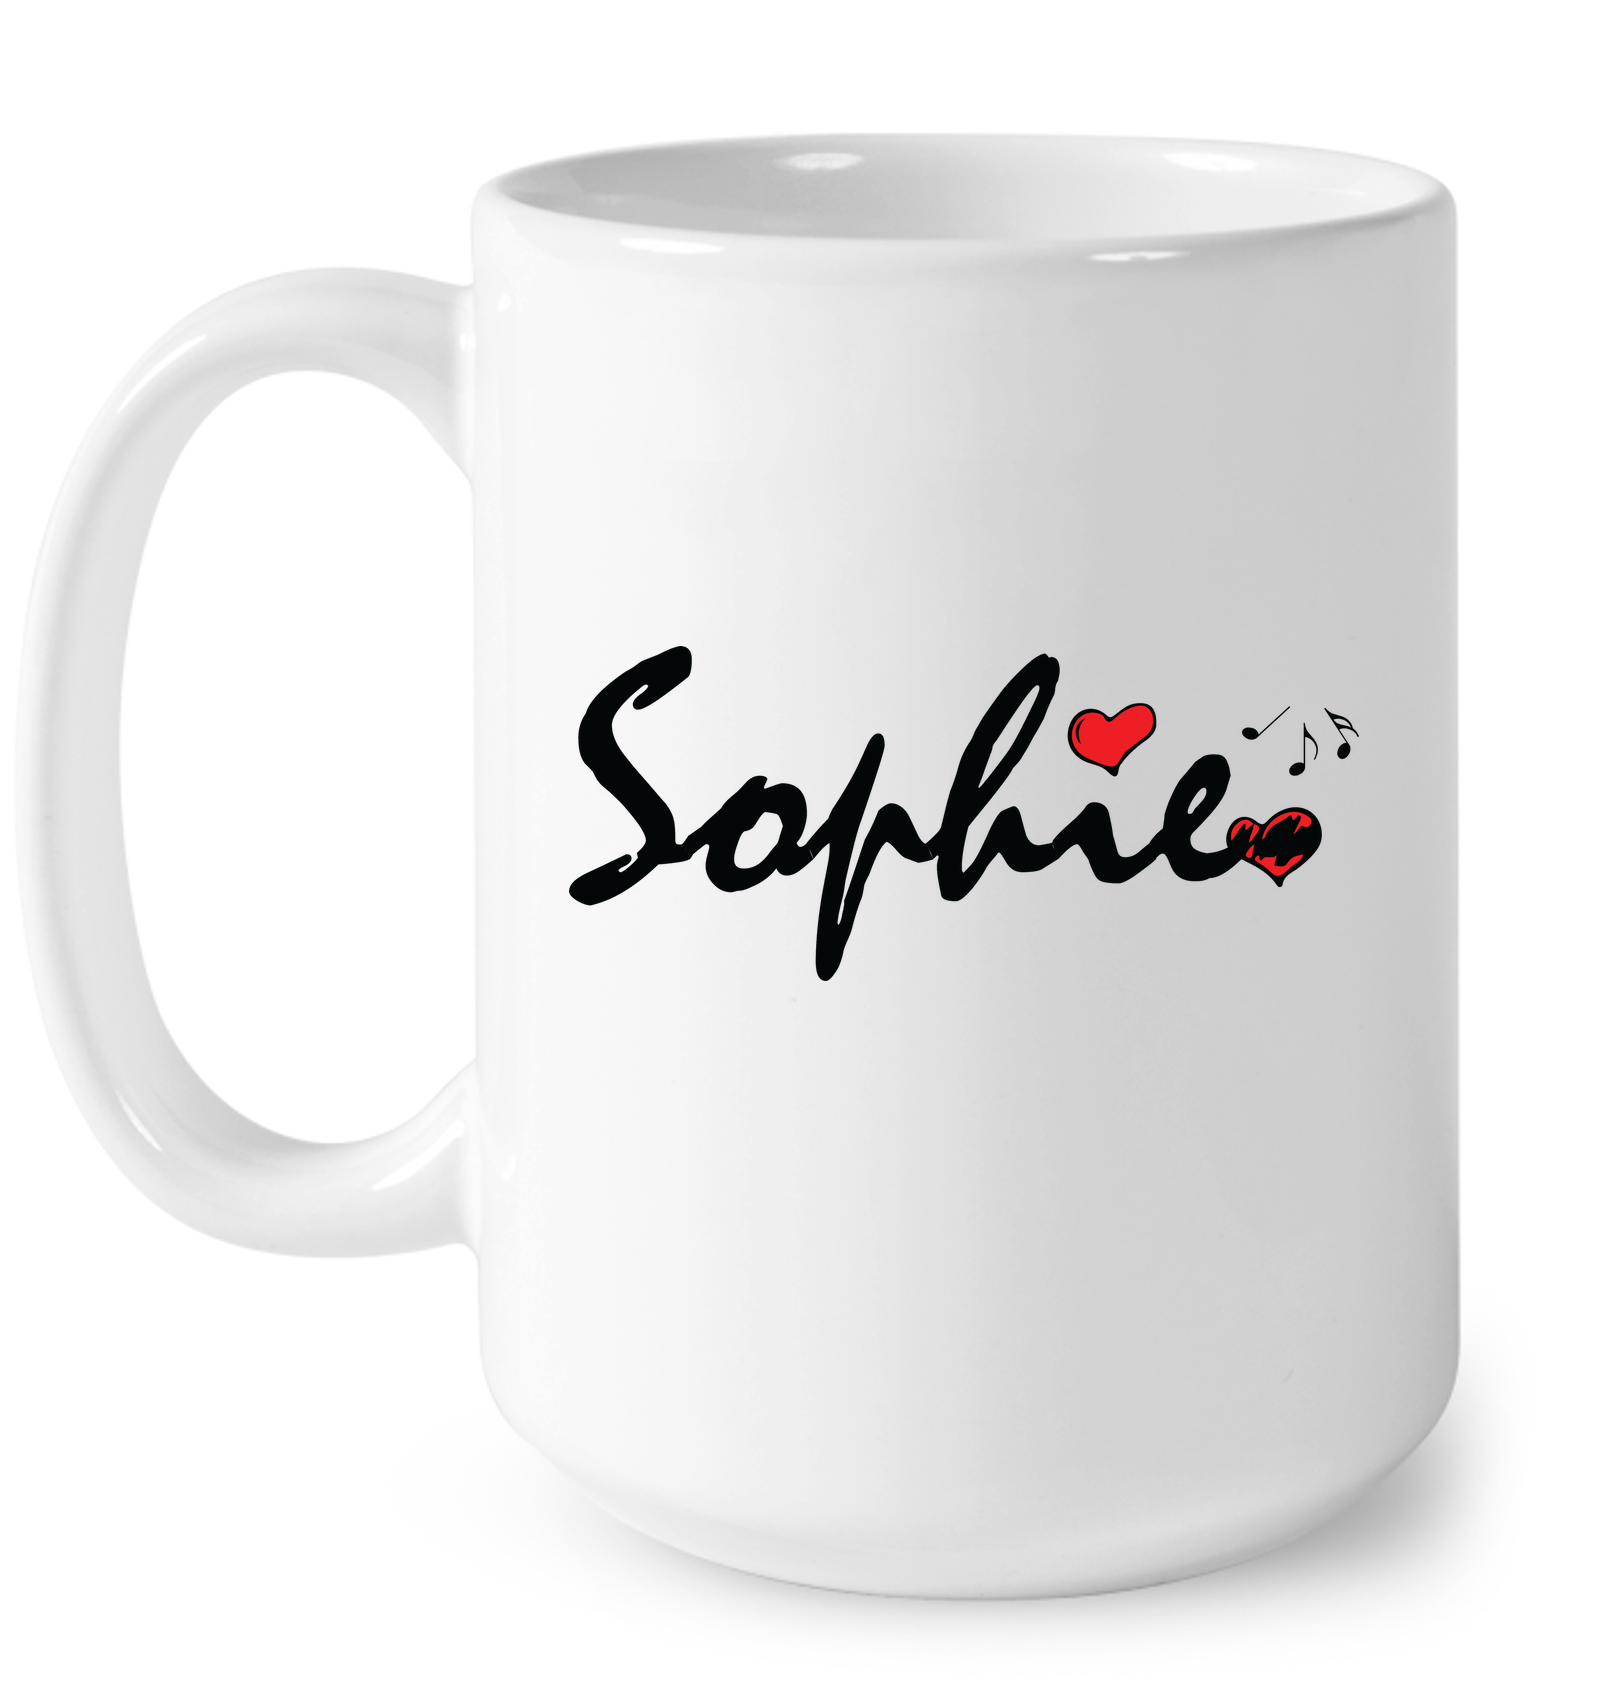 Sophie Loves Music - Ceramic Mug